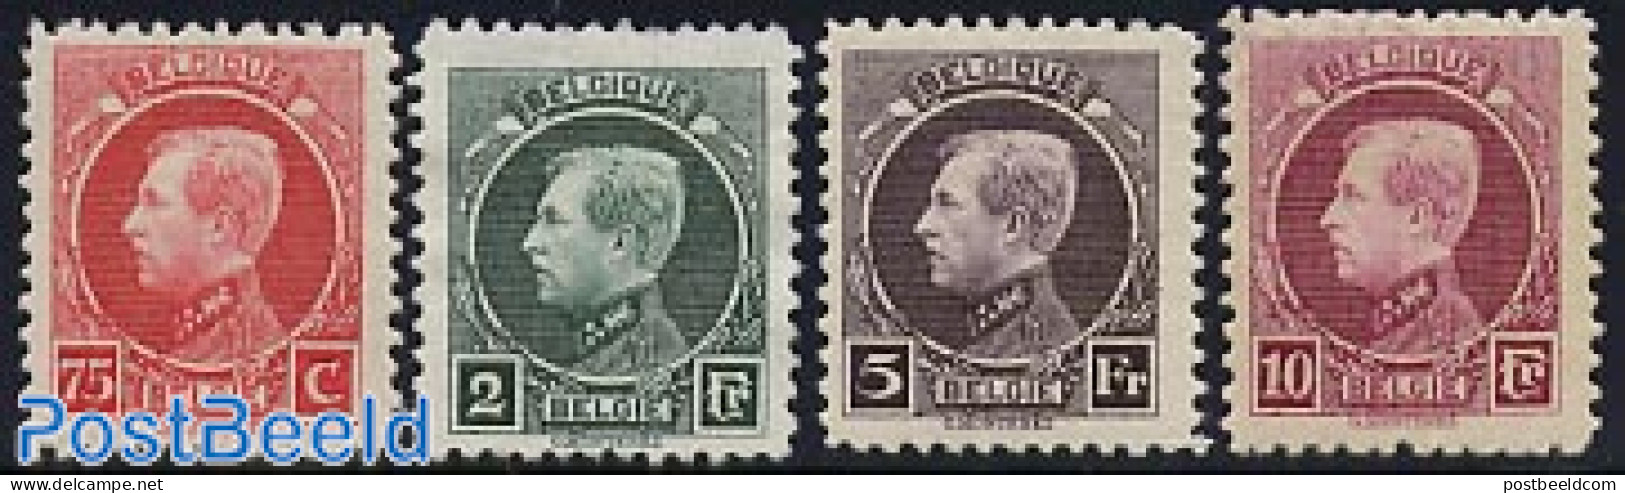 Belgium 1922 Definitives 4v, King Albert I, Mint NH - Ongebruikt